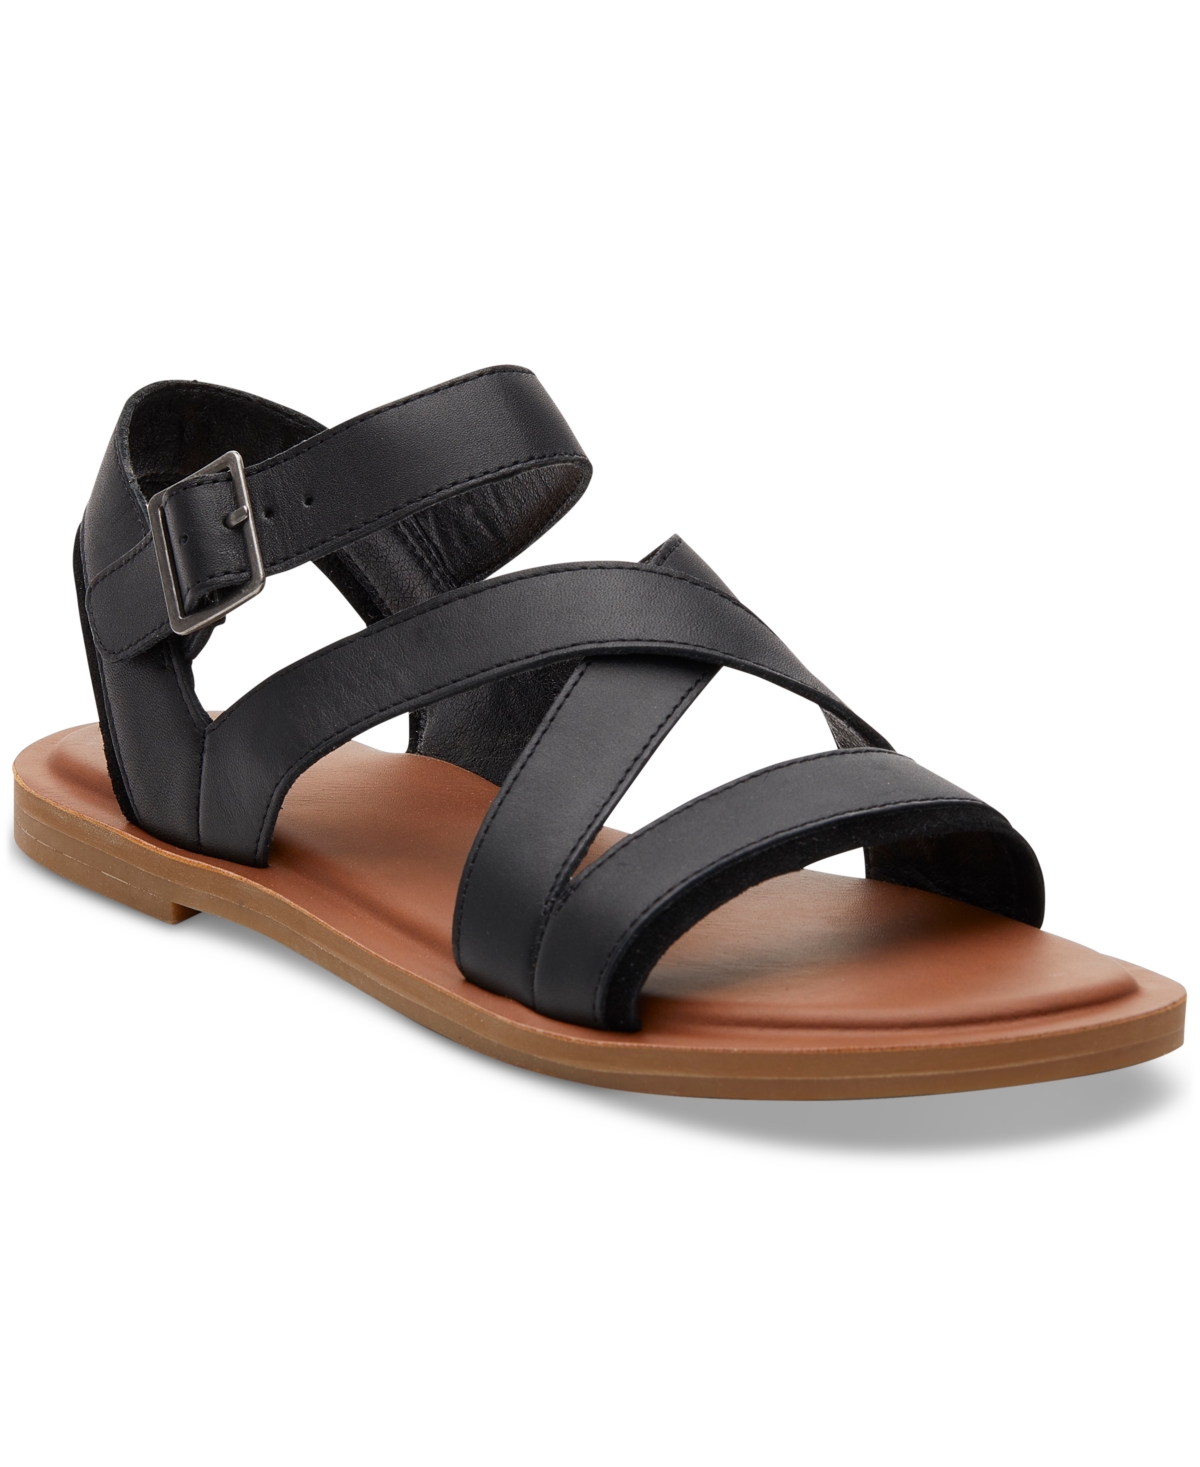 Women's Sloane Strappy Side-Buckle Flat Sandals - Fog Leather